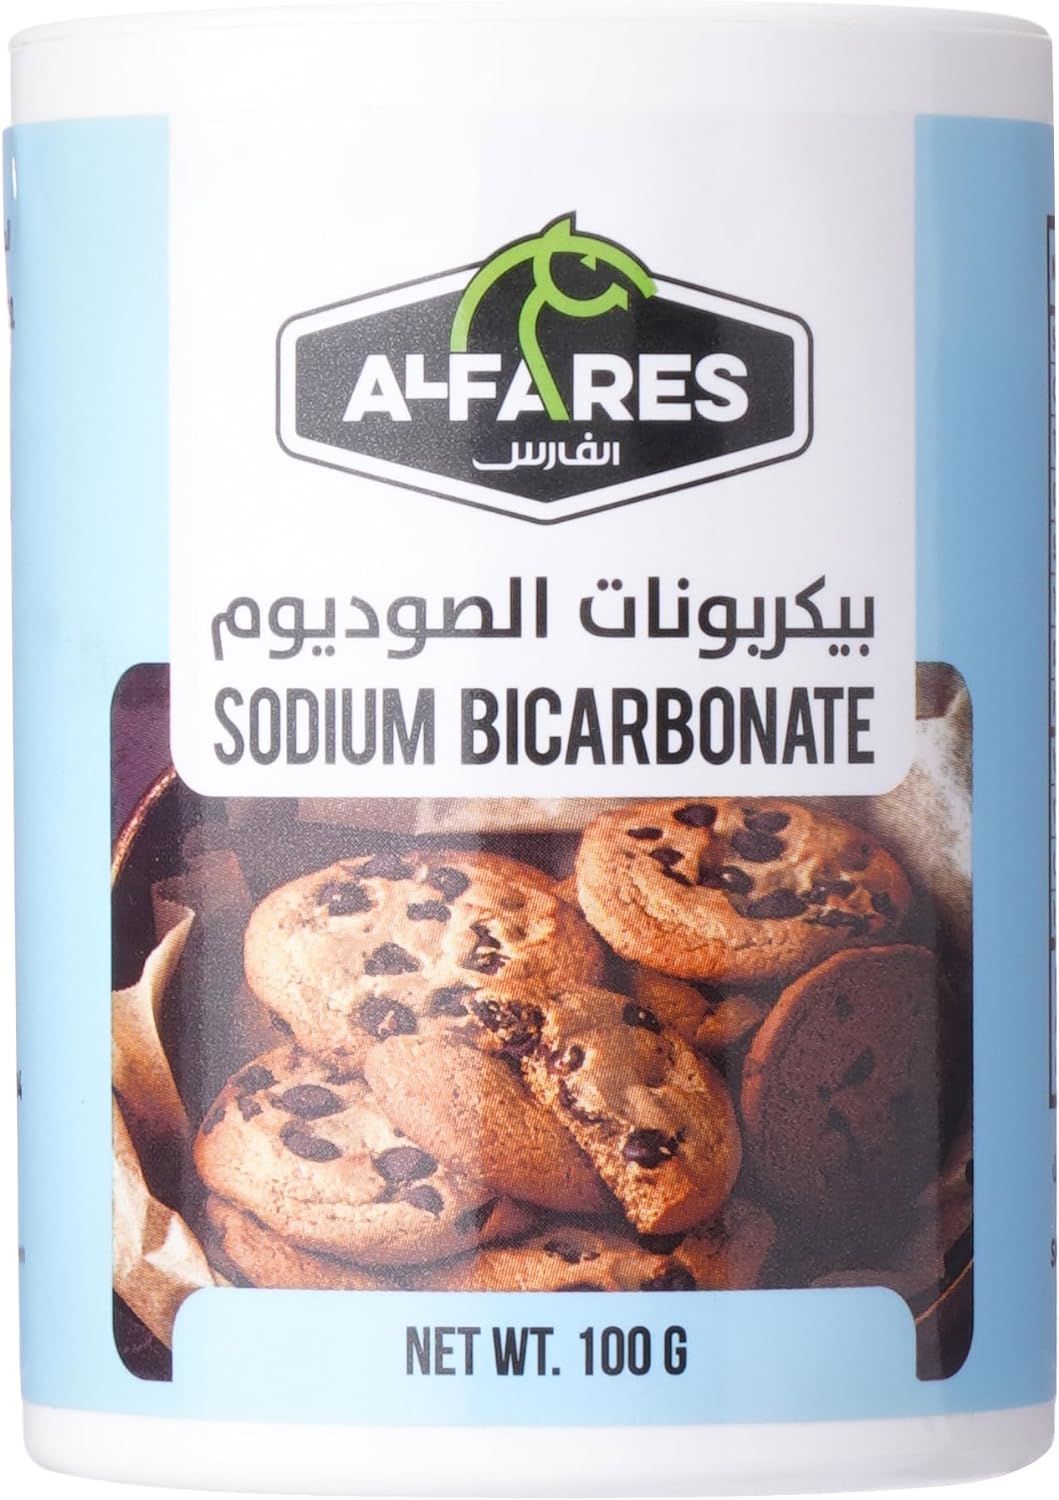 Al Fares Bicarbonate of Soda, 100g - Pack of 1